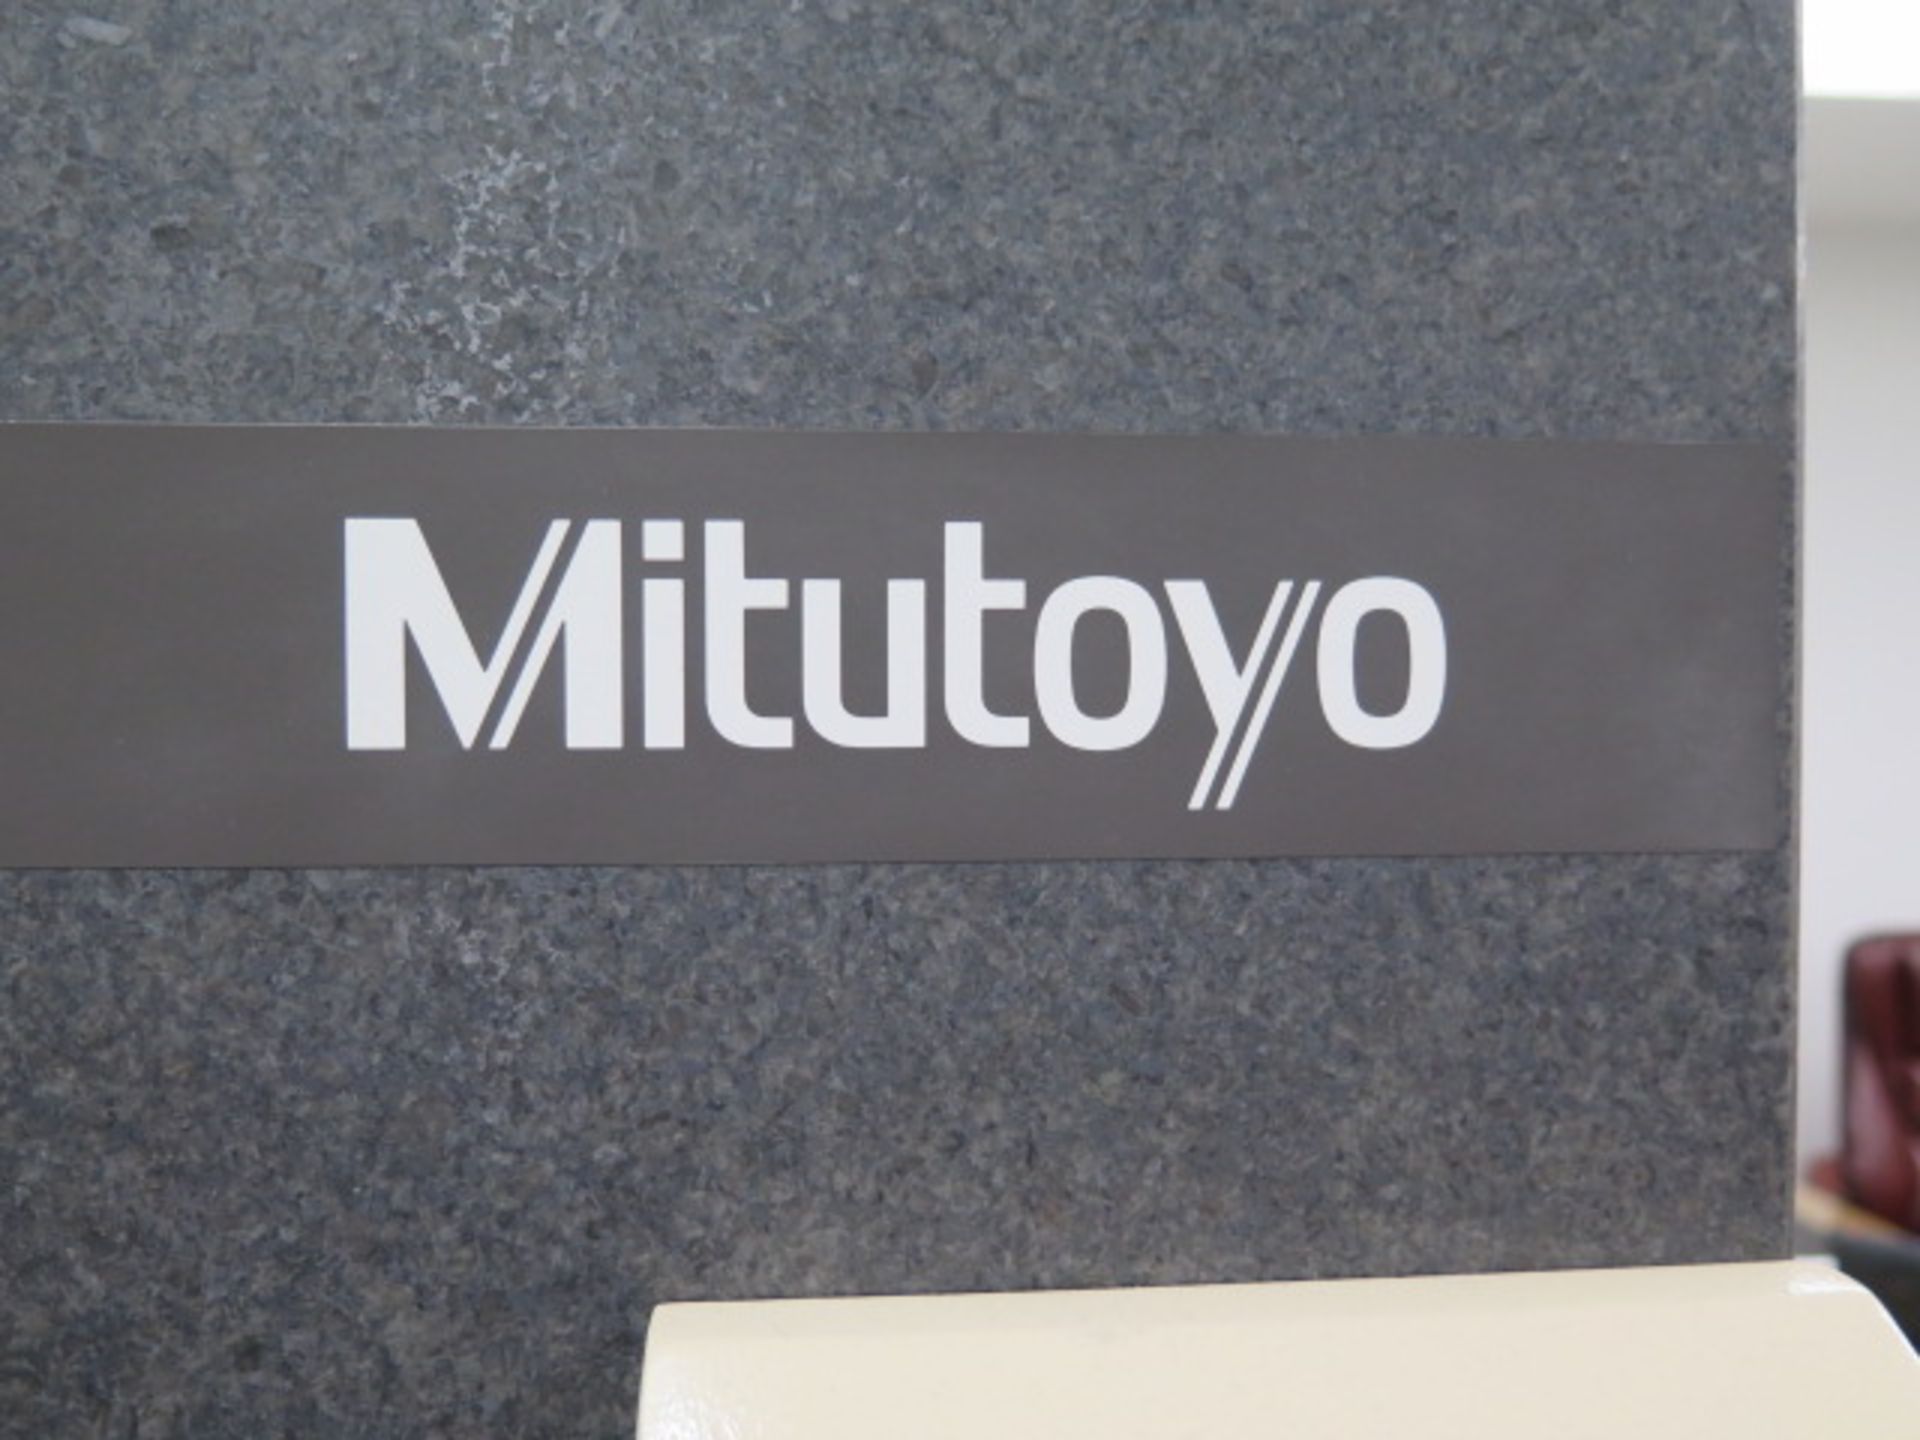 Mitutoyo B706 CMM Machine s/n A9102618-011102001 w/ Renishaw MIH Digital Probe Head, SOLD AS IS - Image 15 of 17